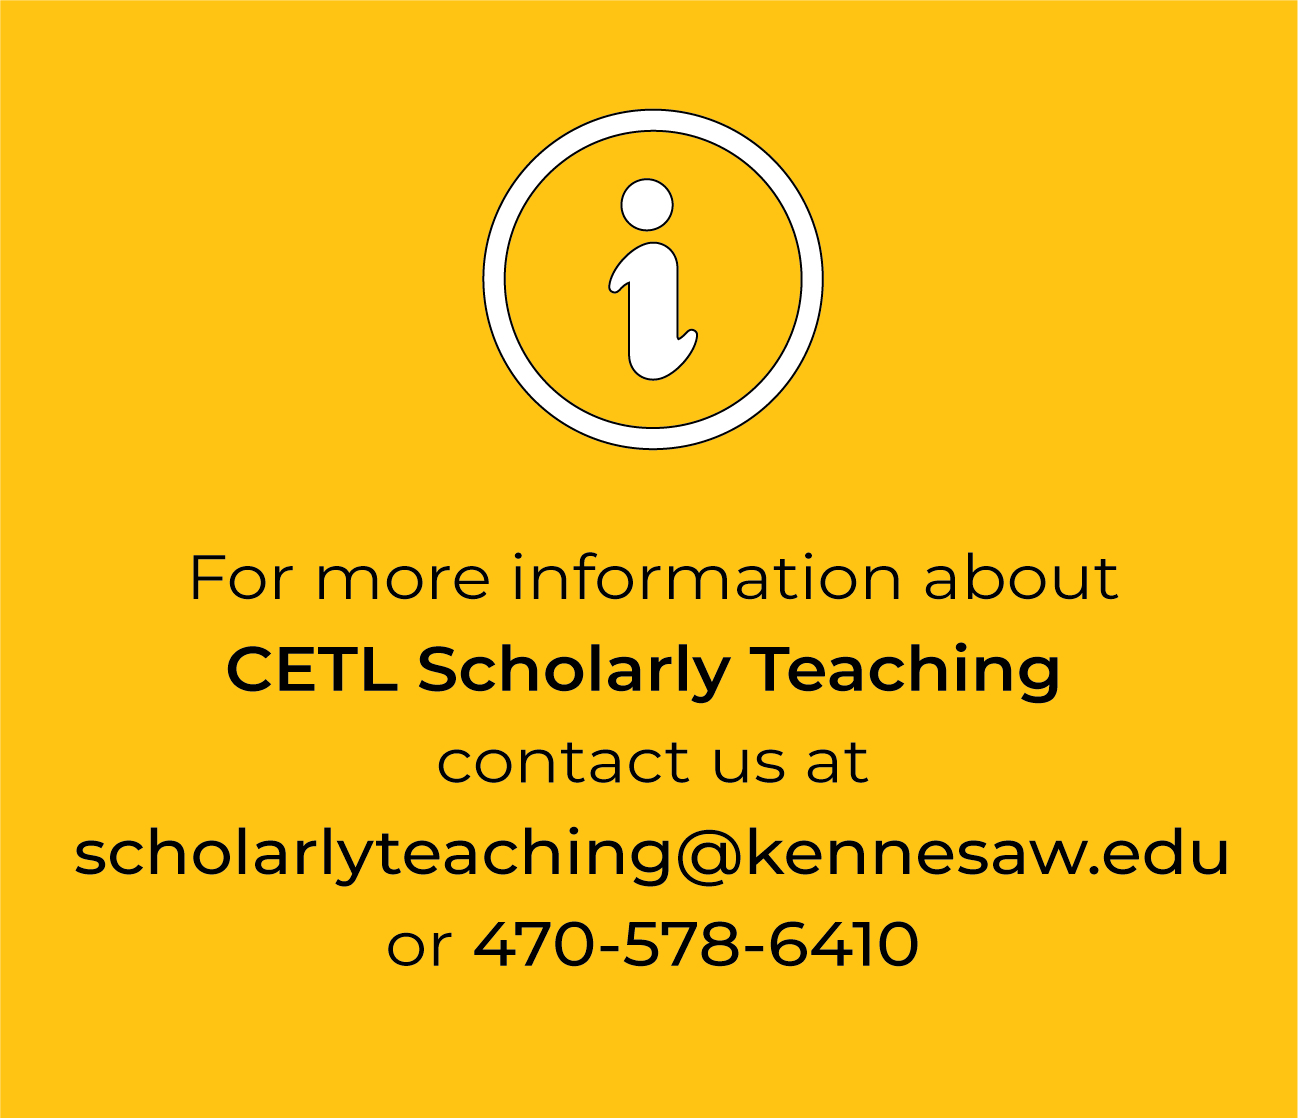 questions to scholarlyteaching@kennesaw.edu